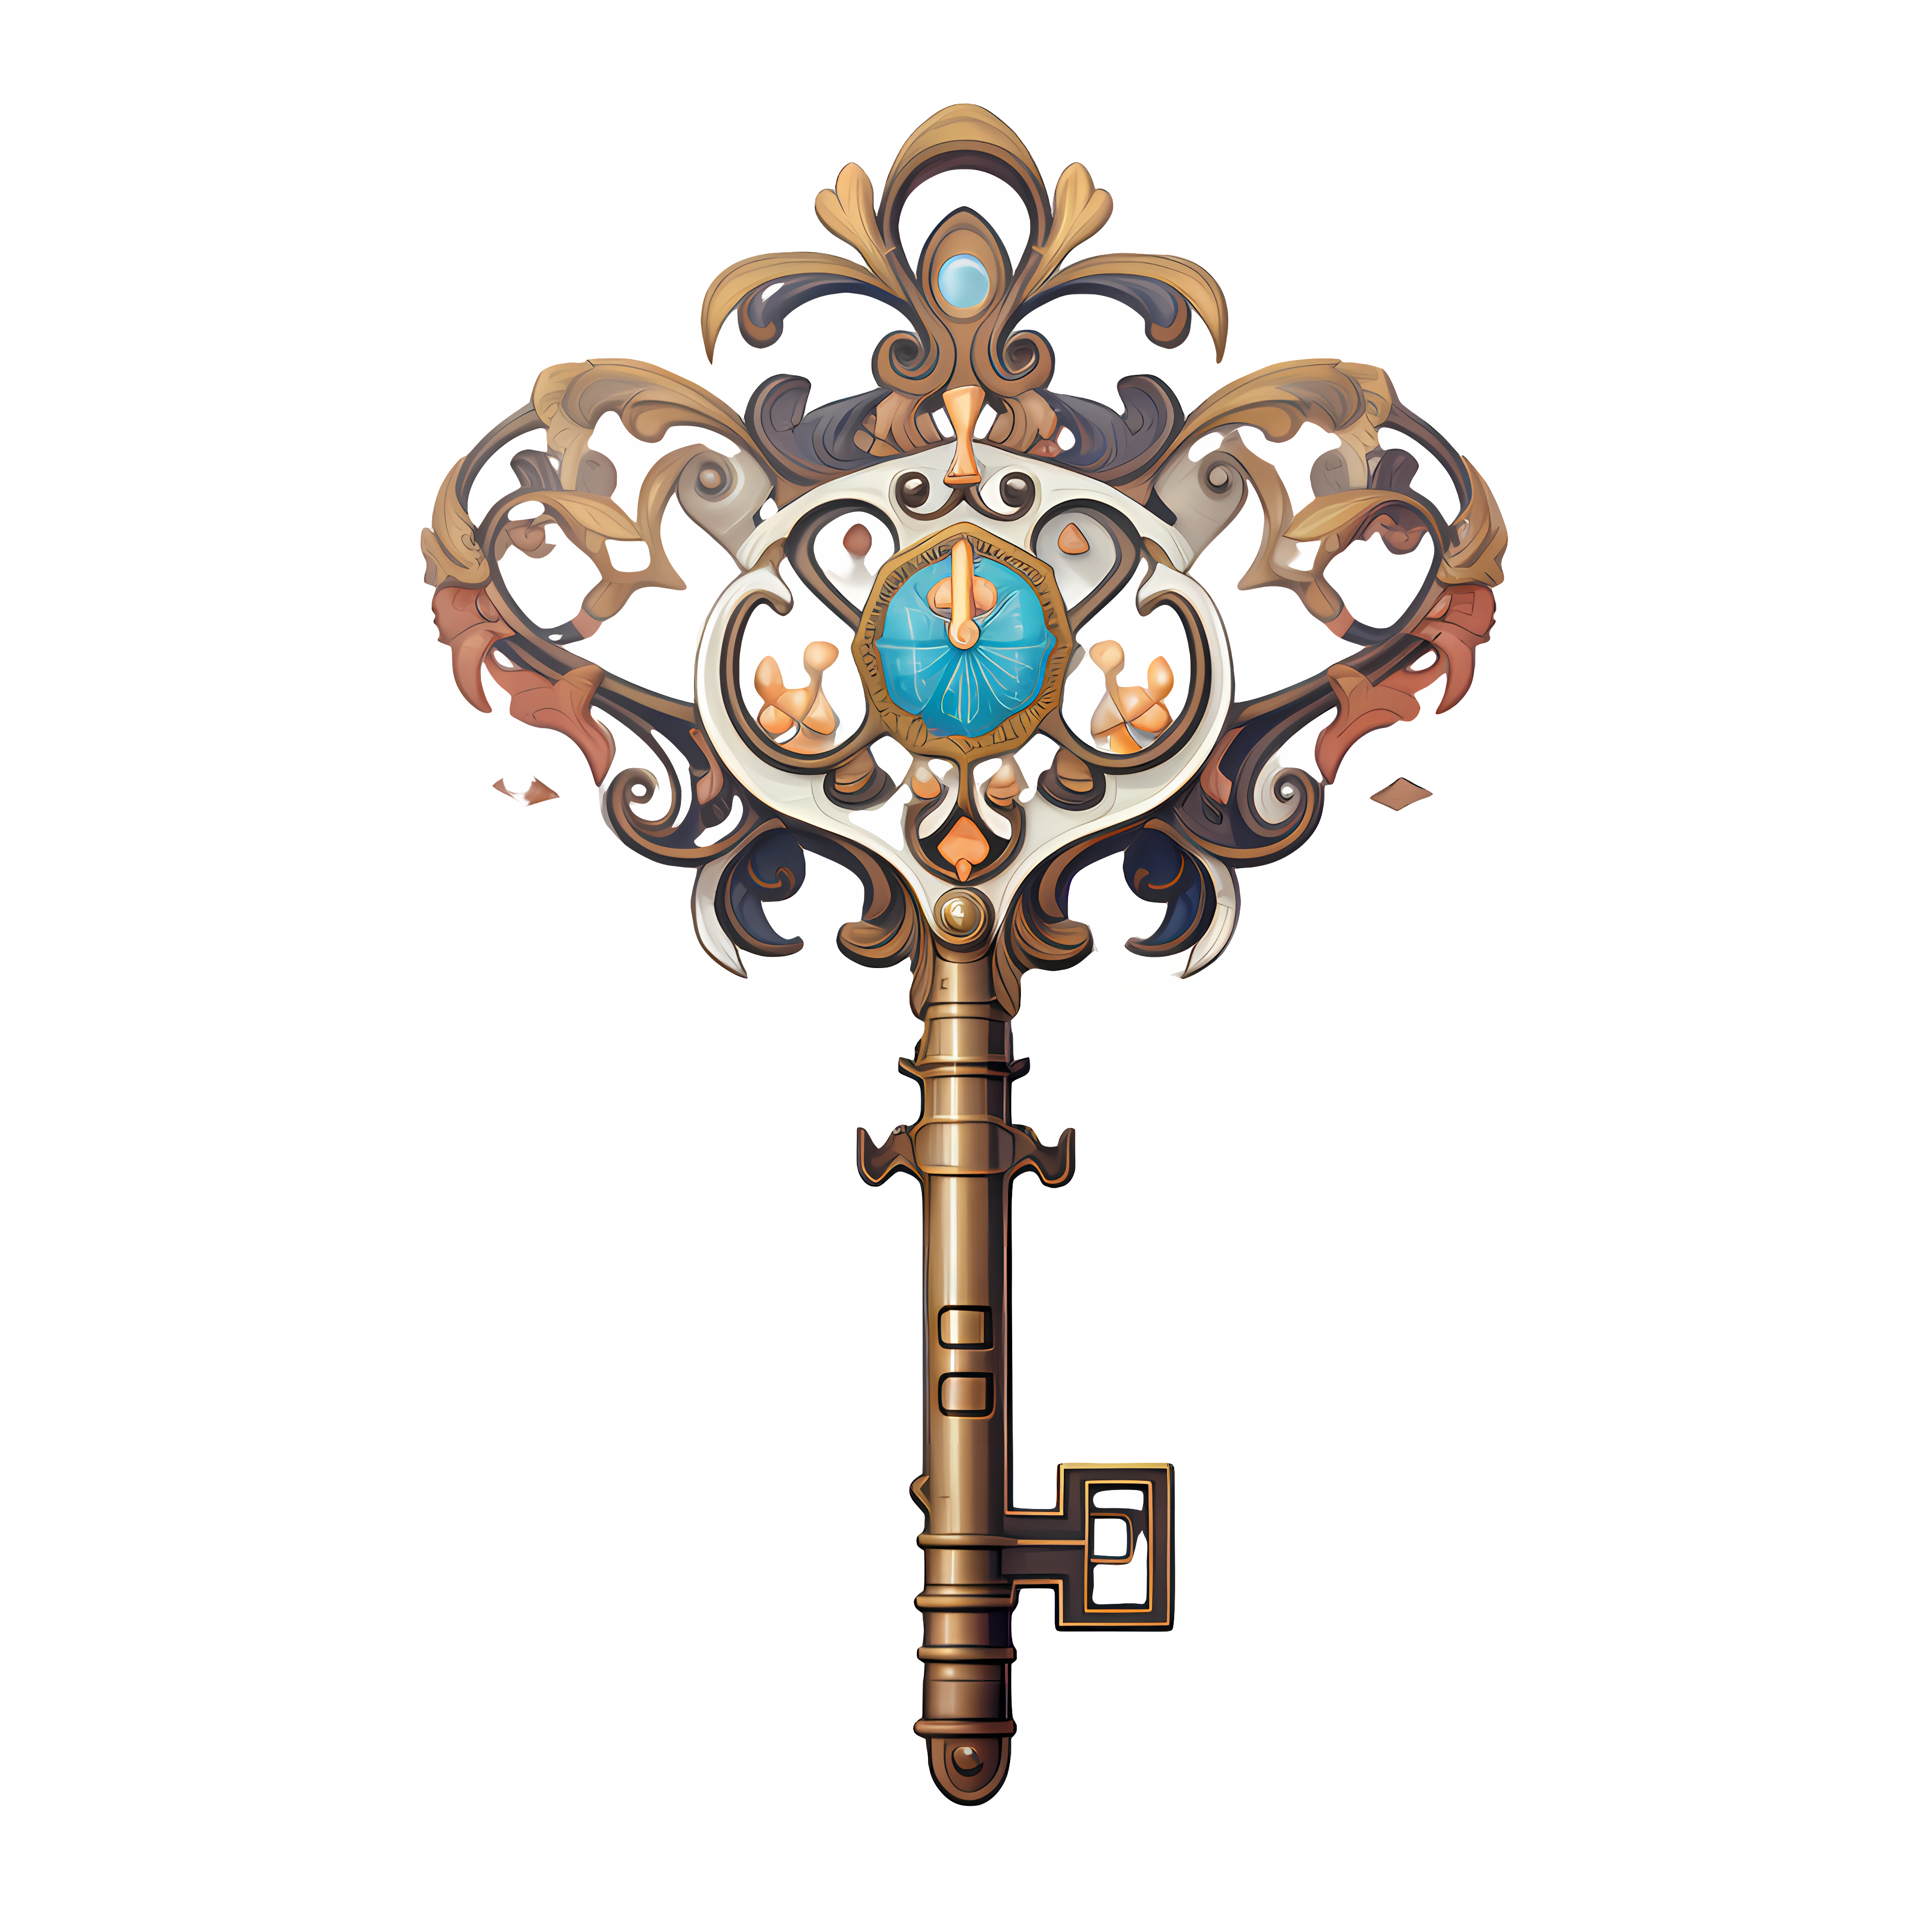 golden key key ornate decorative antique Clipart